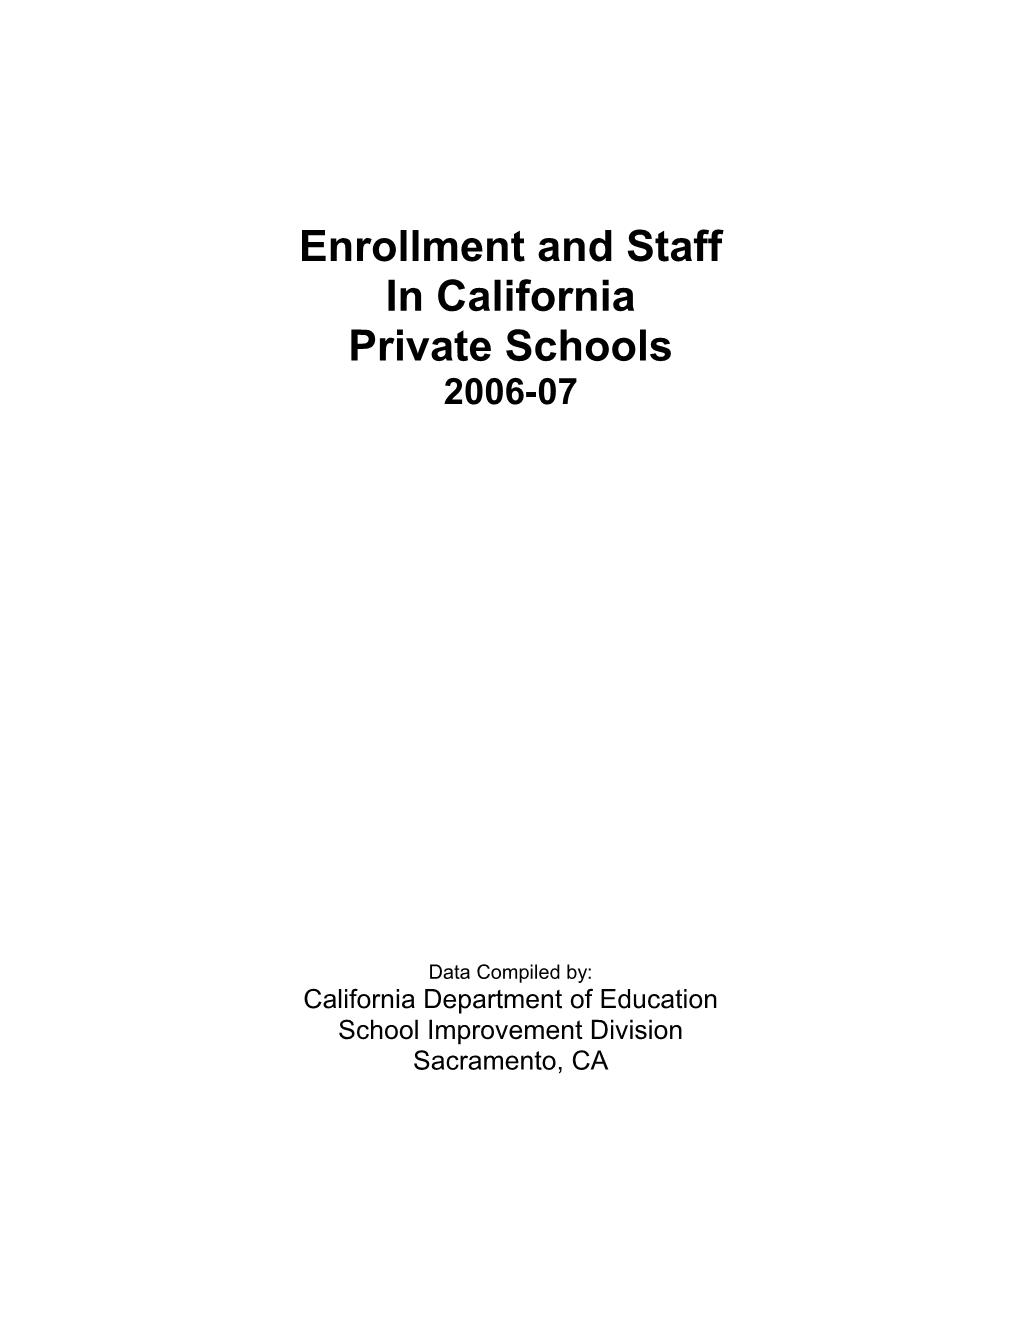 Enrollment & Staff in CA Private Schls 2006-07 - Private Schools (CA Dept of Education)